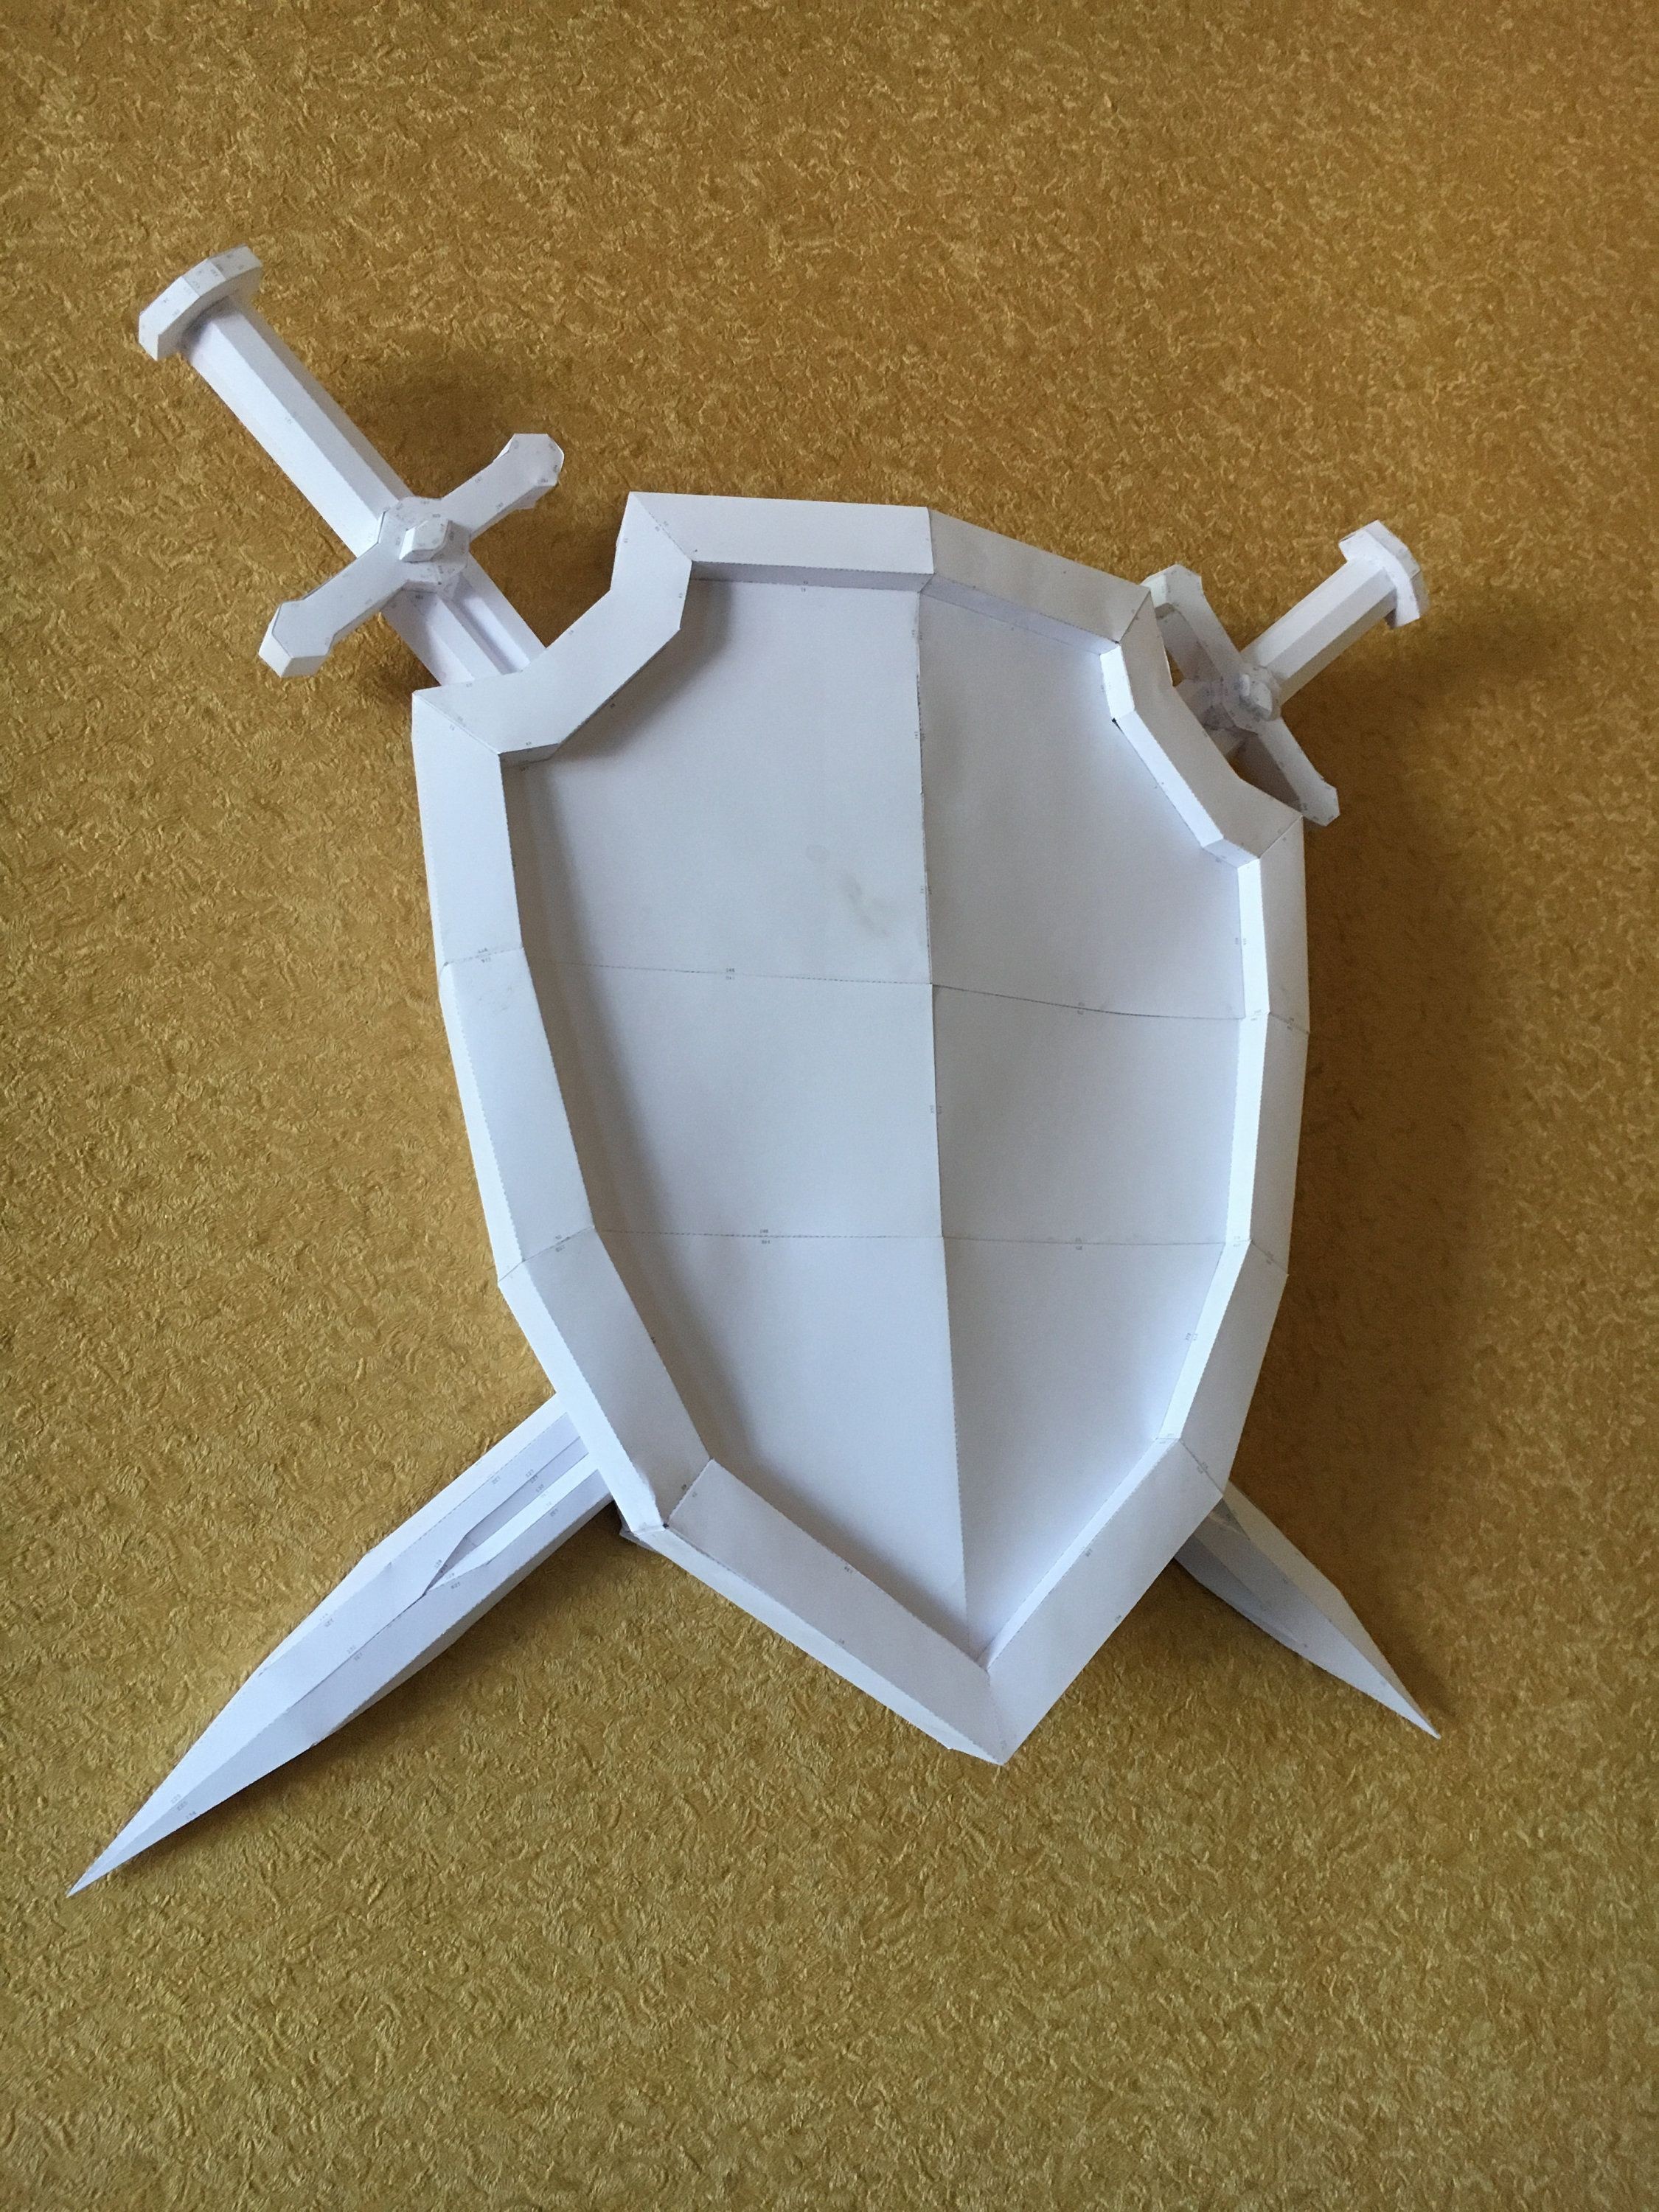 Papercraft Owl Sword Shield Diy Papercraft Model ÐÑÐ¼Ð°Ð¶Ð½ÑÐµ Ð¸Ð·Ð´ÐµÐ Ð¸Ñ